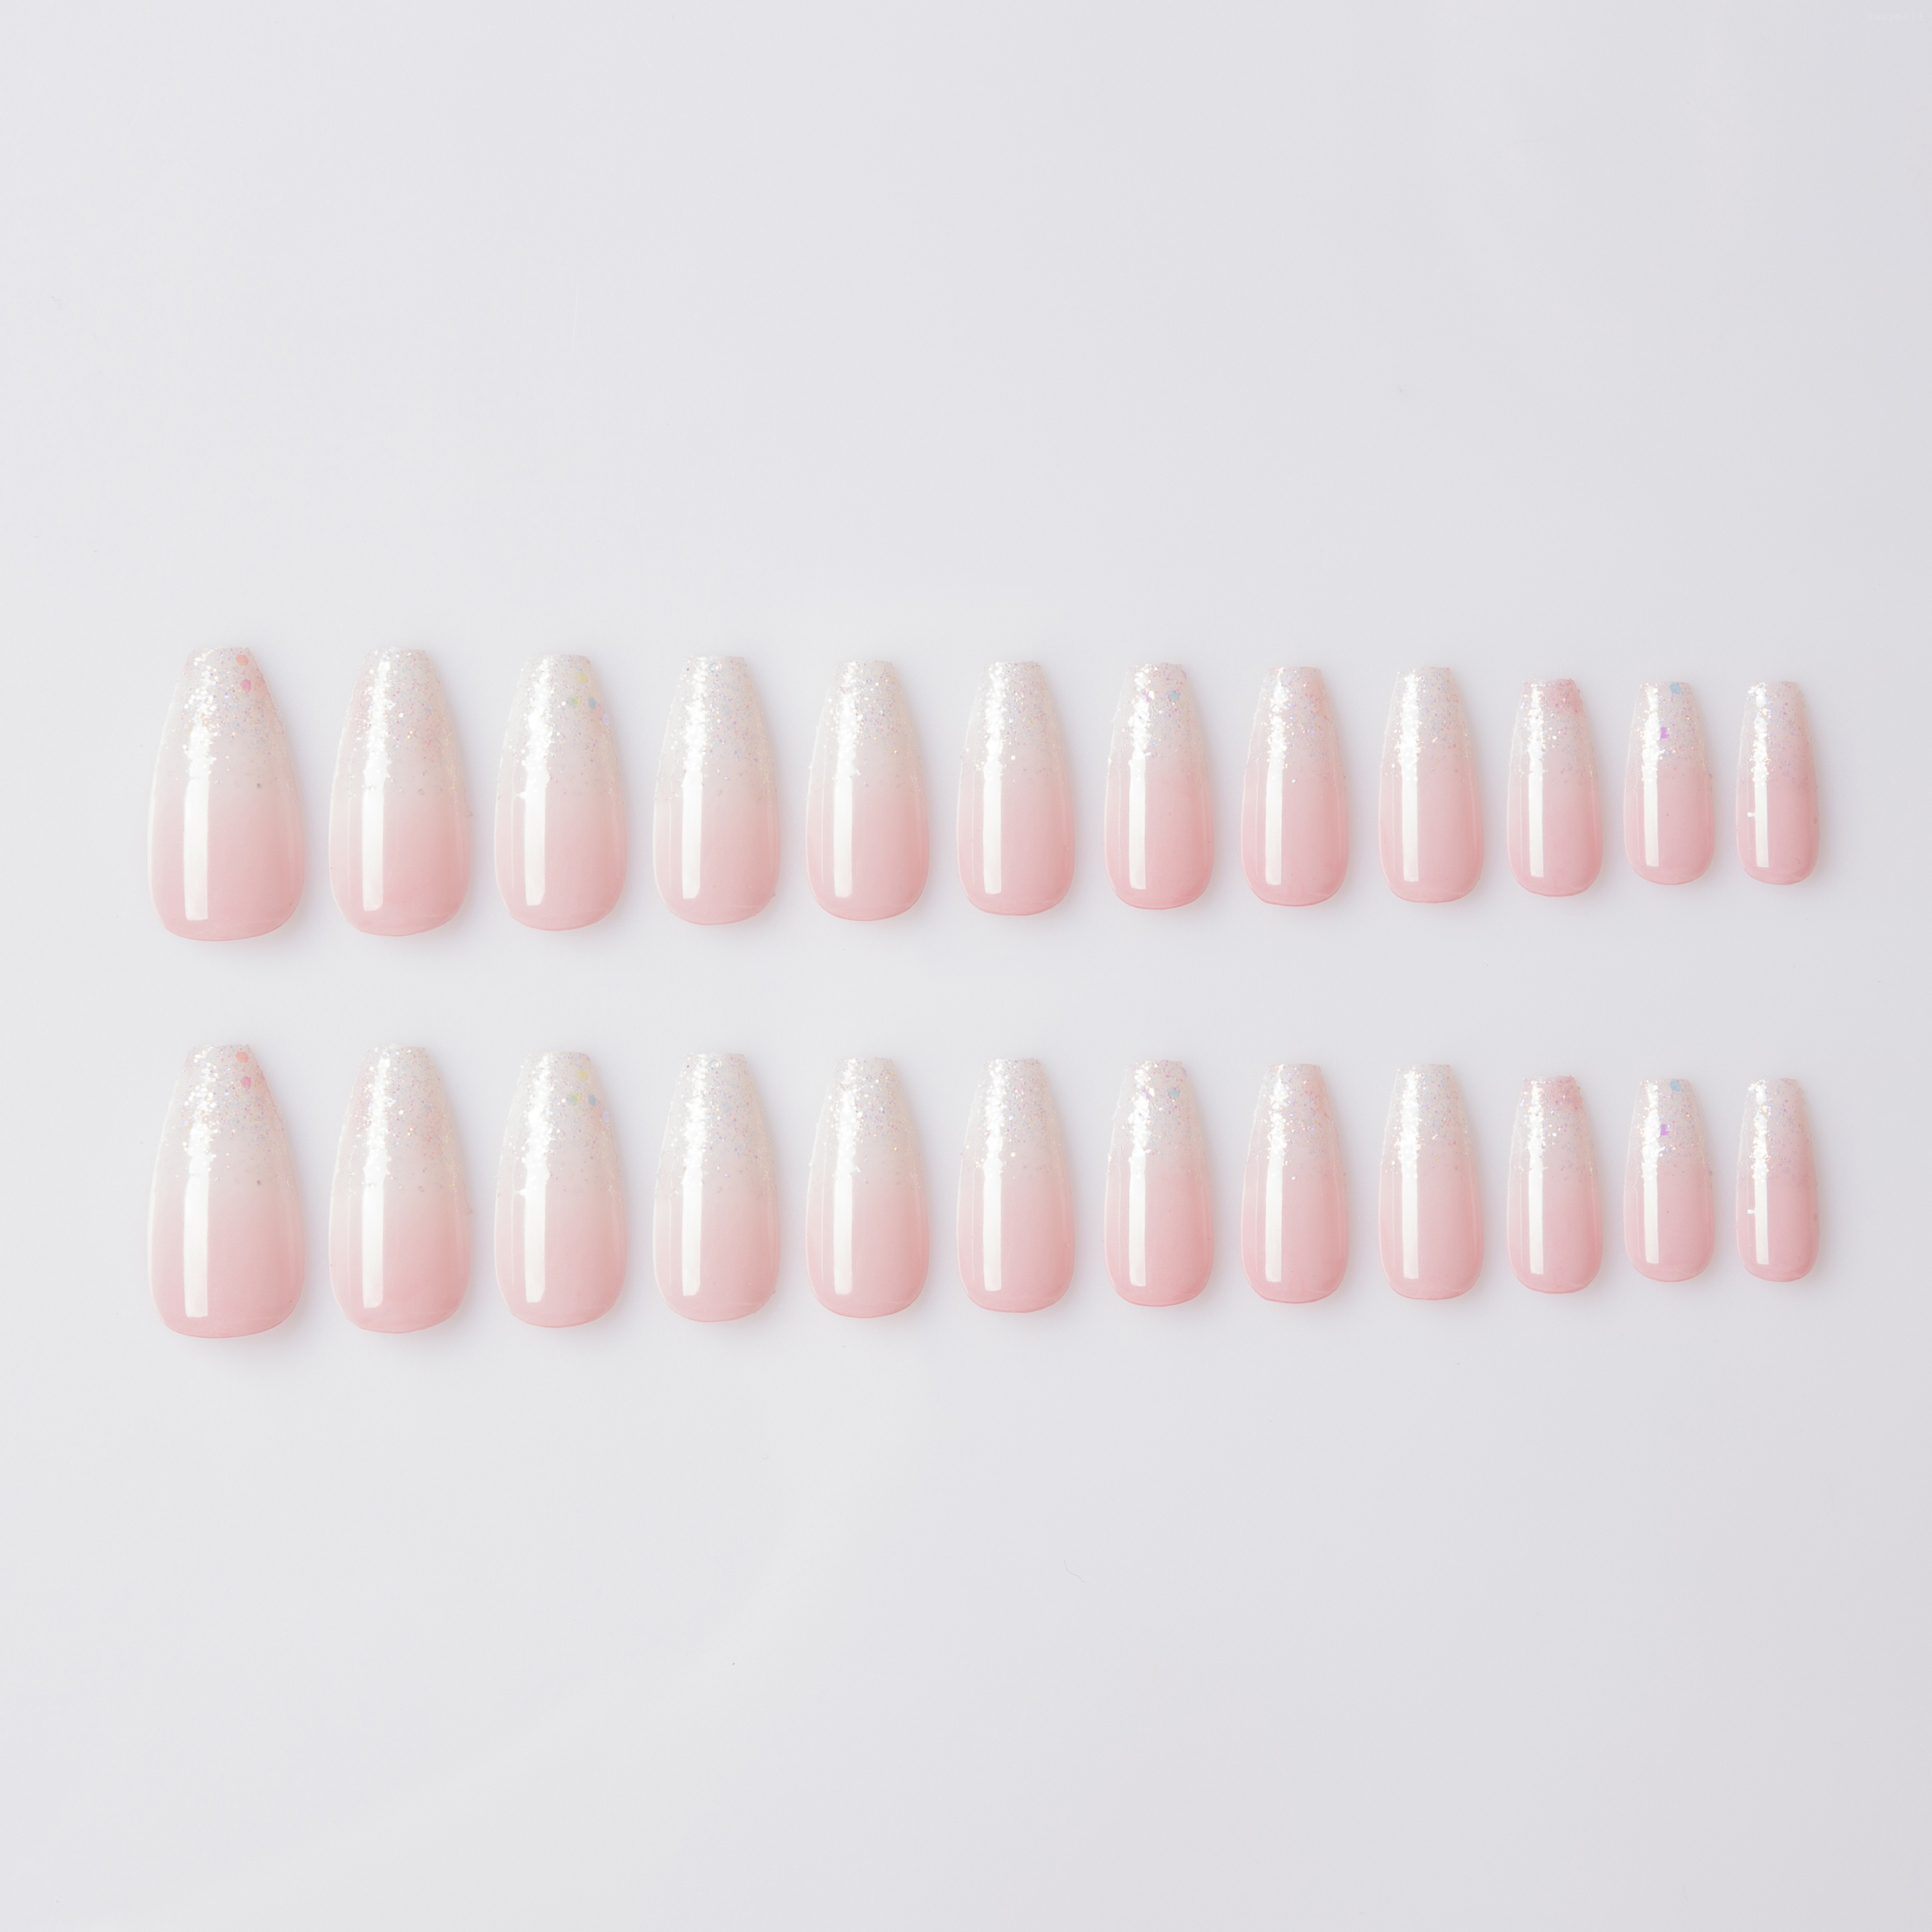 2021 factory OEM Nail Art Strips Design designs Adhesive false nails